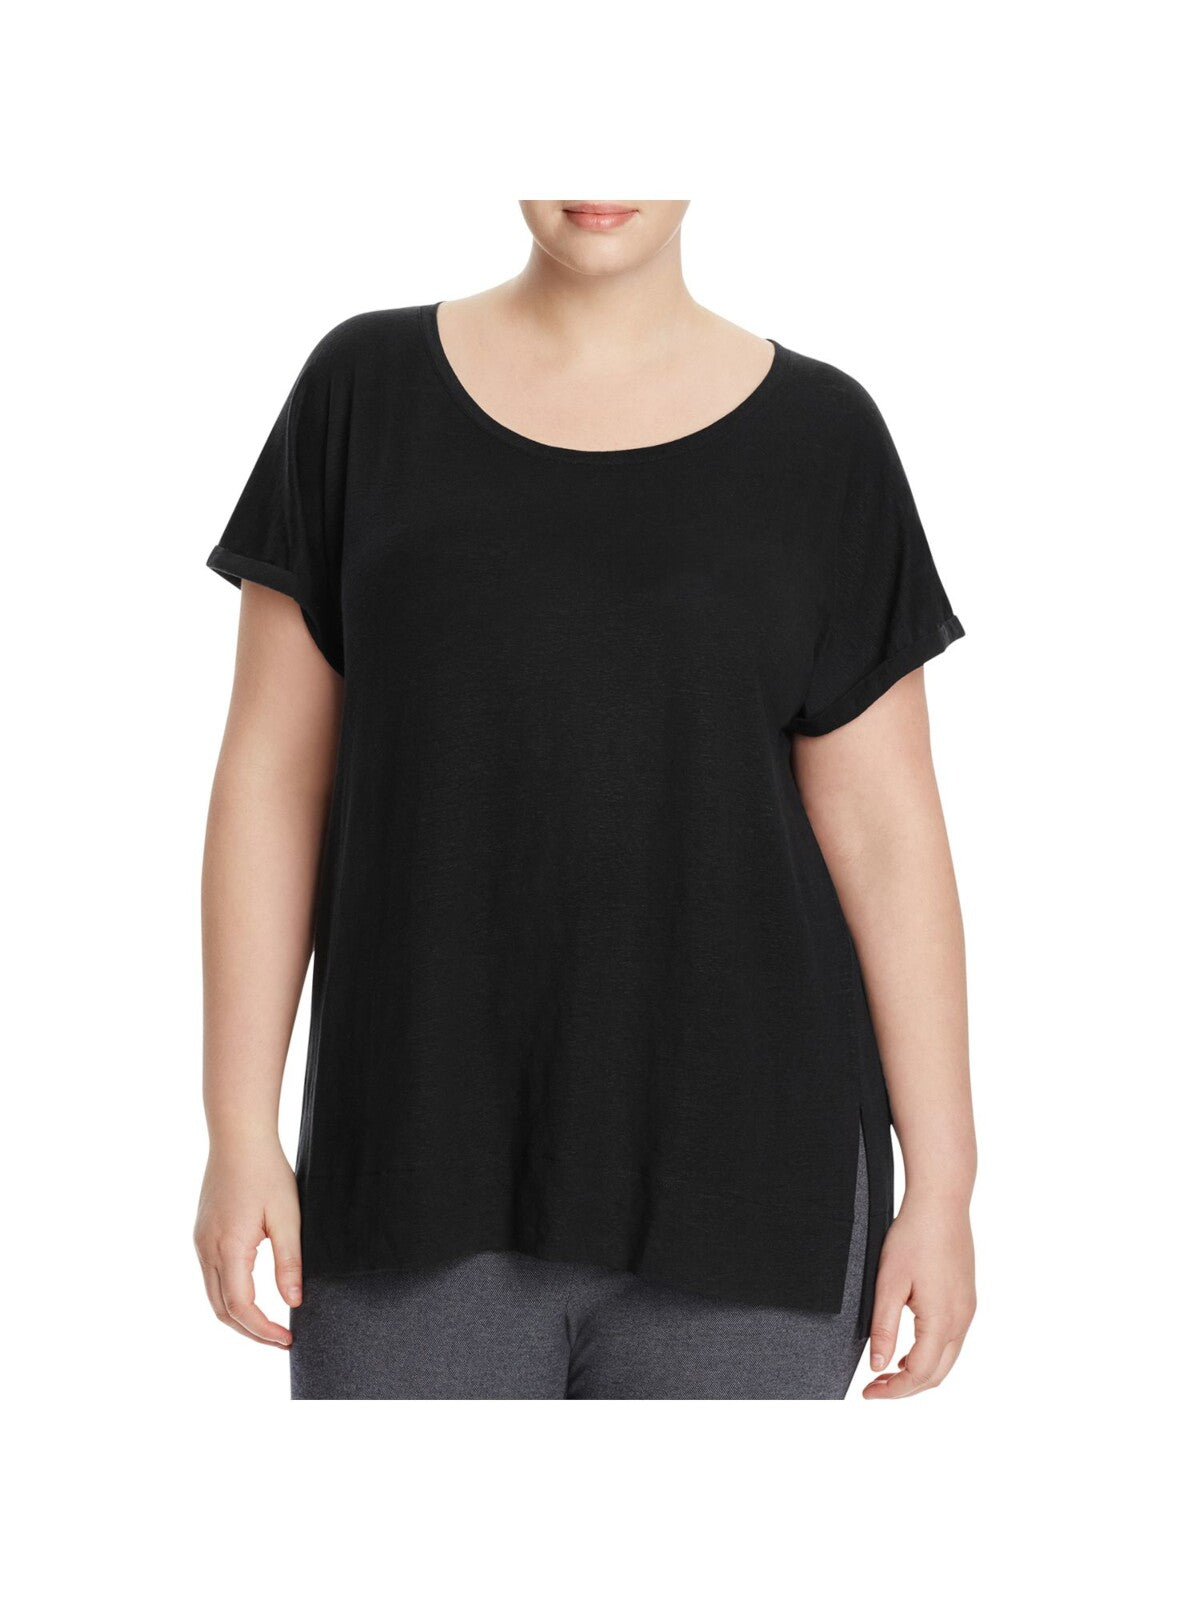 LYSSE Womens Black Stretch Scoop Neck T-Shirt Plus 3X